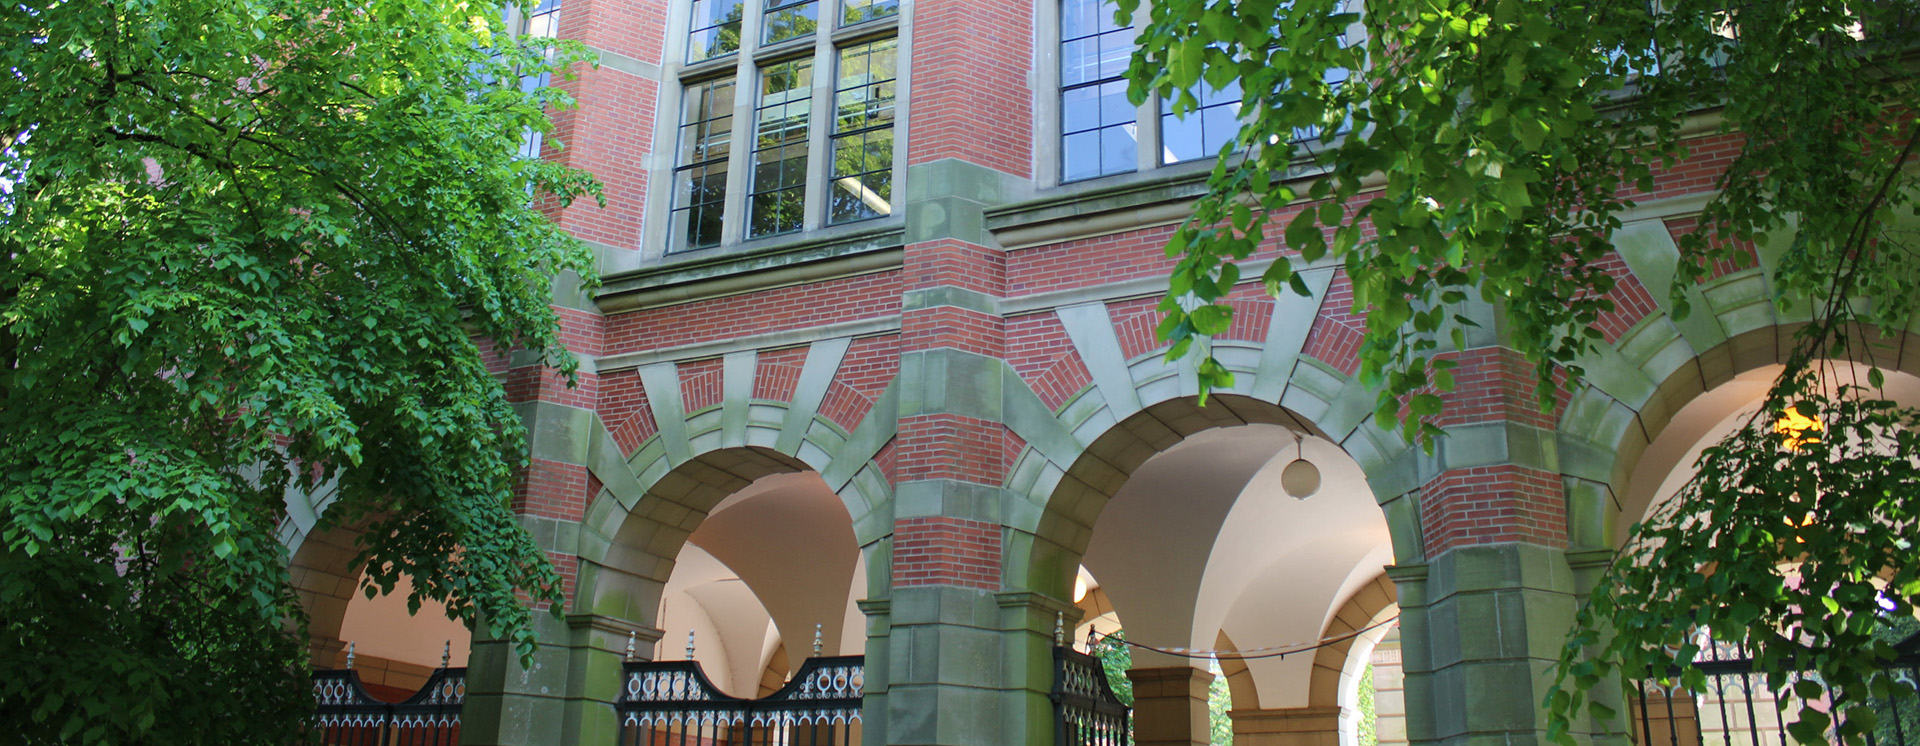 Law building, University of Birmingham